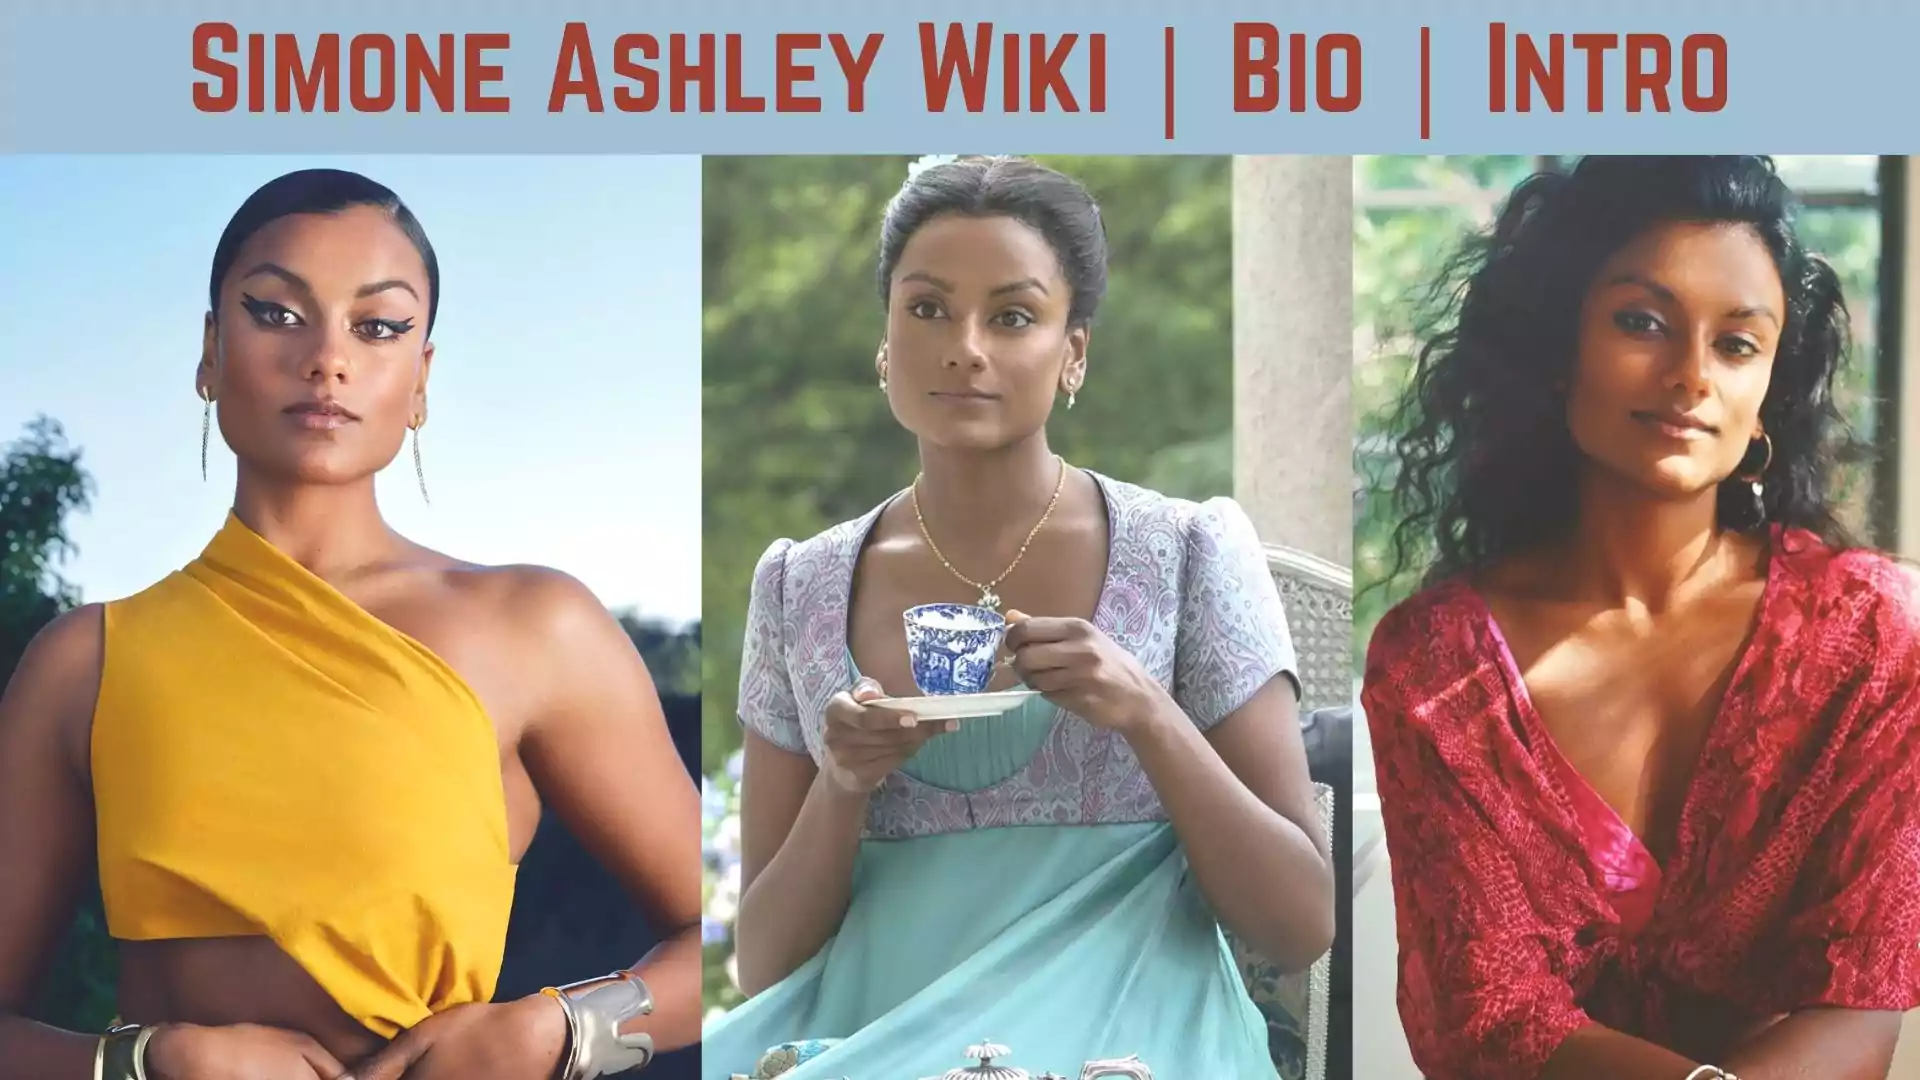 Simone Ashley Wiki | Bio | Intro | Wallpaper and images